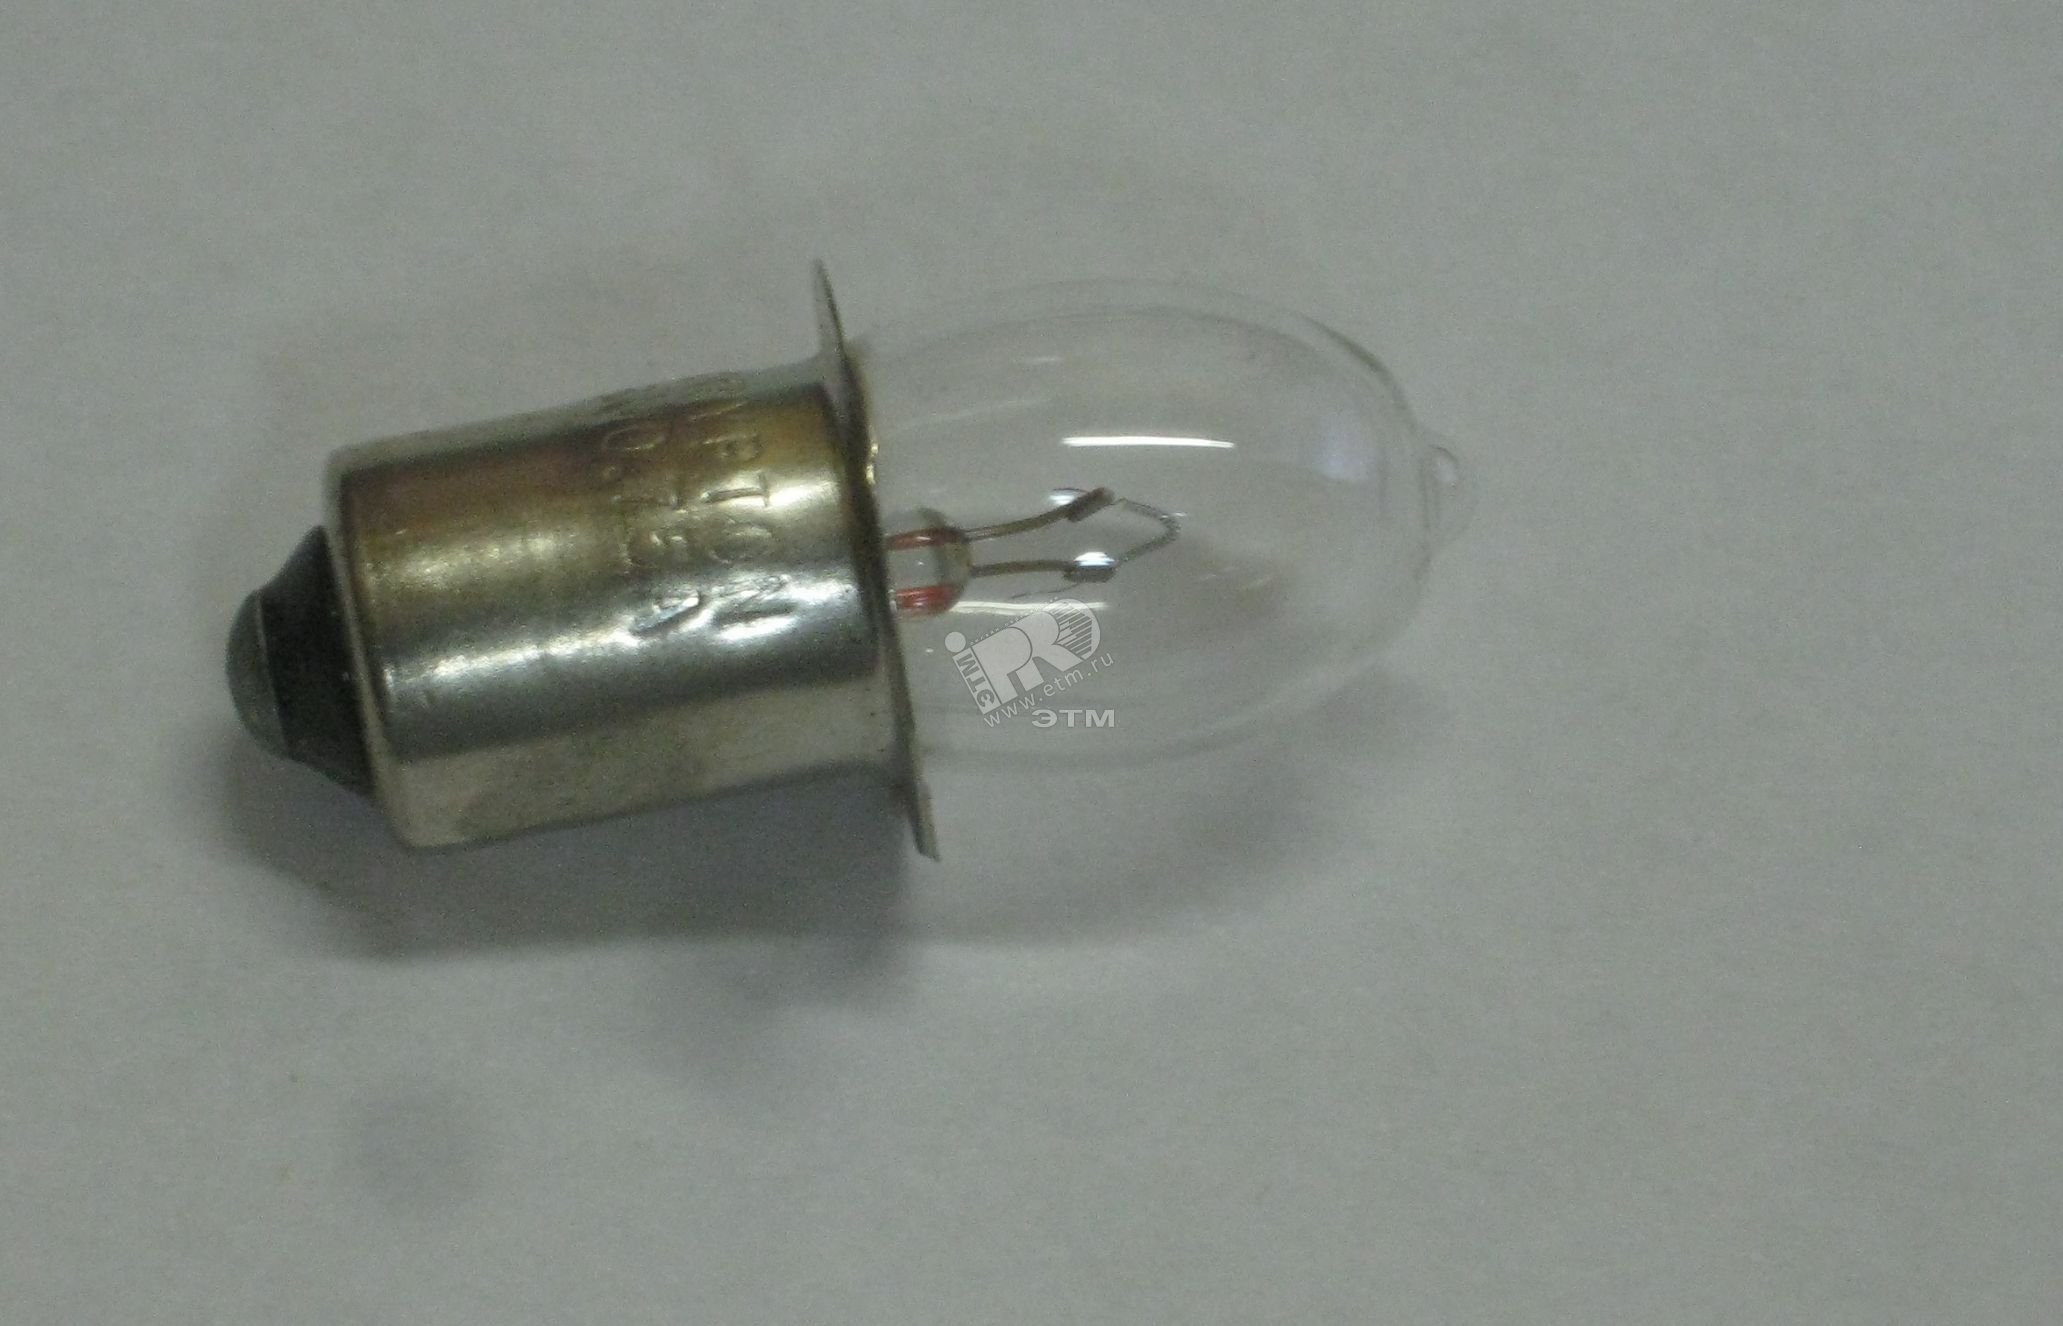 1 5 в 6 вольт. Лампа для фонаря фаг 6v 0.75a p13.5s Mactronic. P13.5S светодиодная лампа 6 вольт. Лампочка для фонарика без резьбы 2,4v - 0,5a Криптон p13.5s. Лампа накаливания 6 вольт p13.5s.